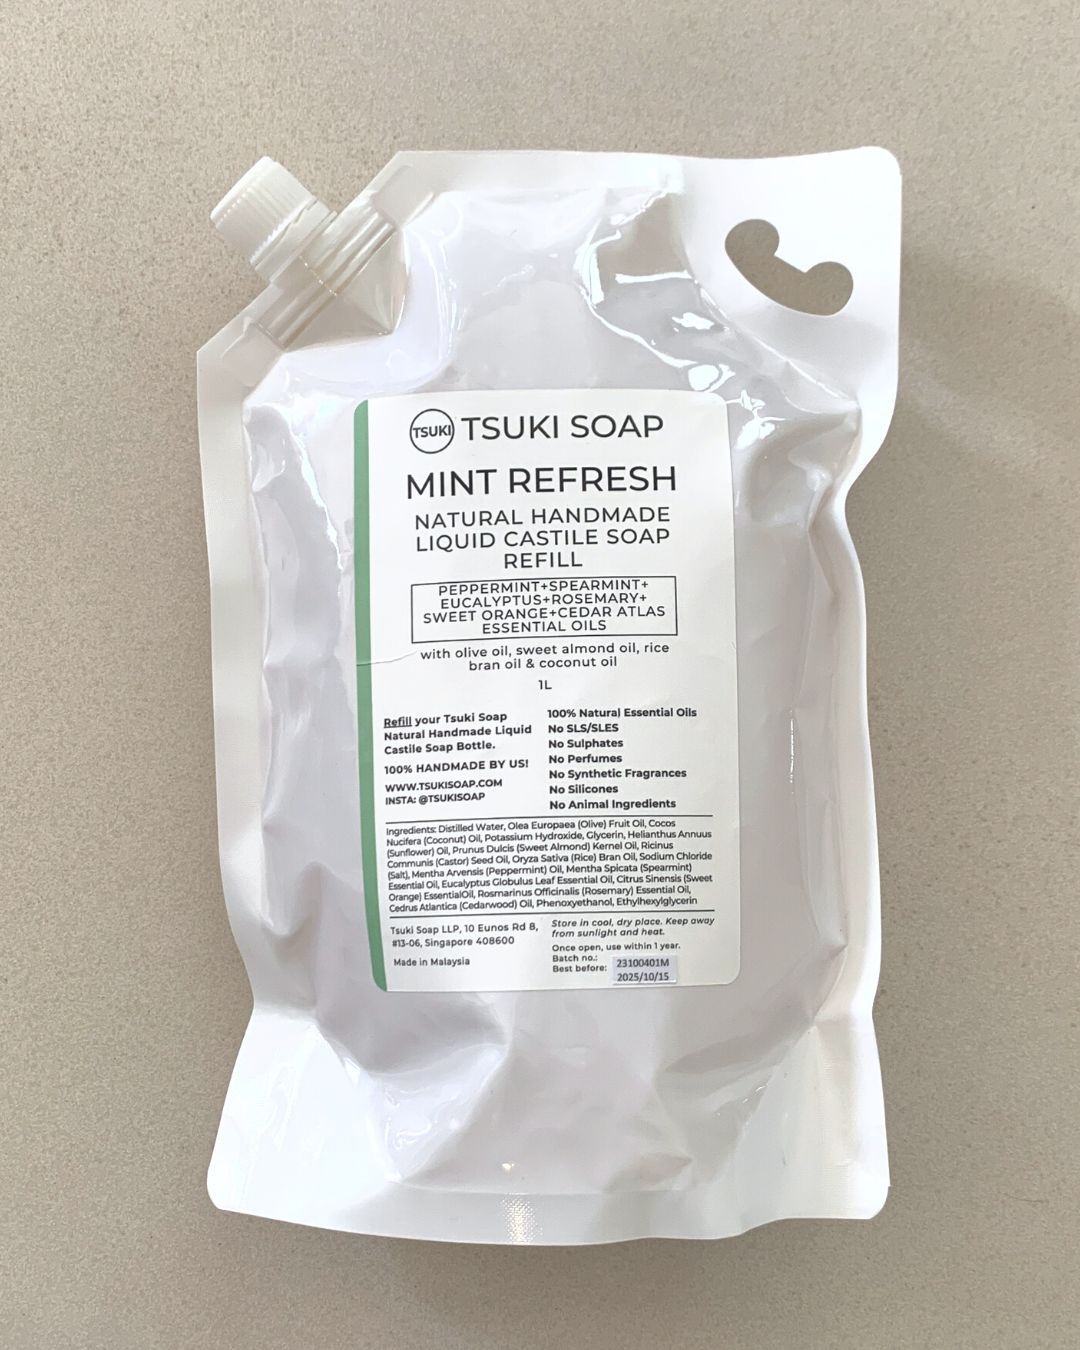 Mint Refresh Liquid Castile Soap - 1L Refill